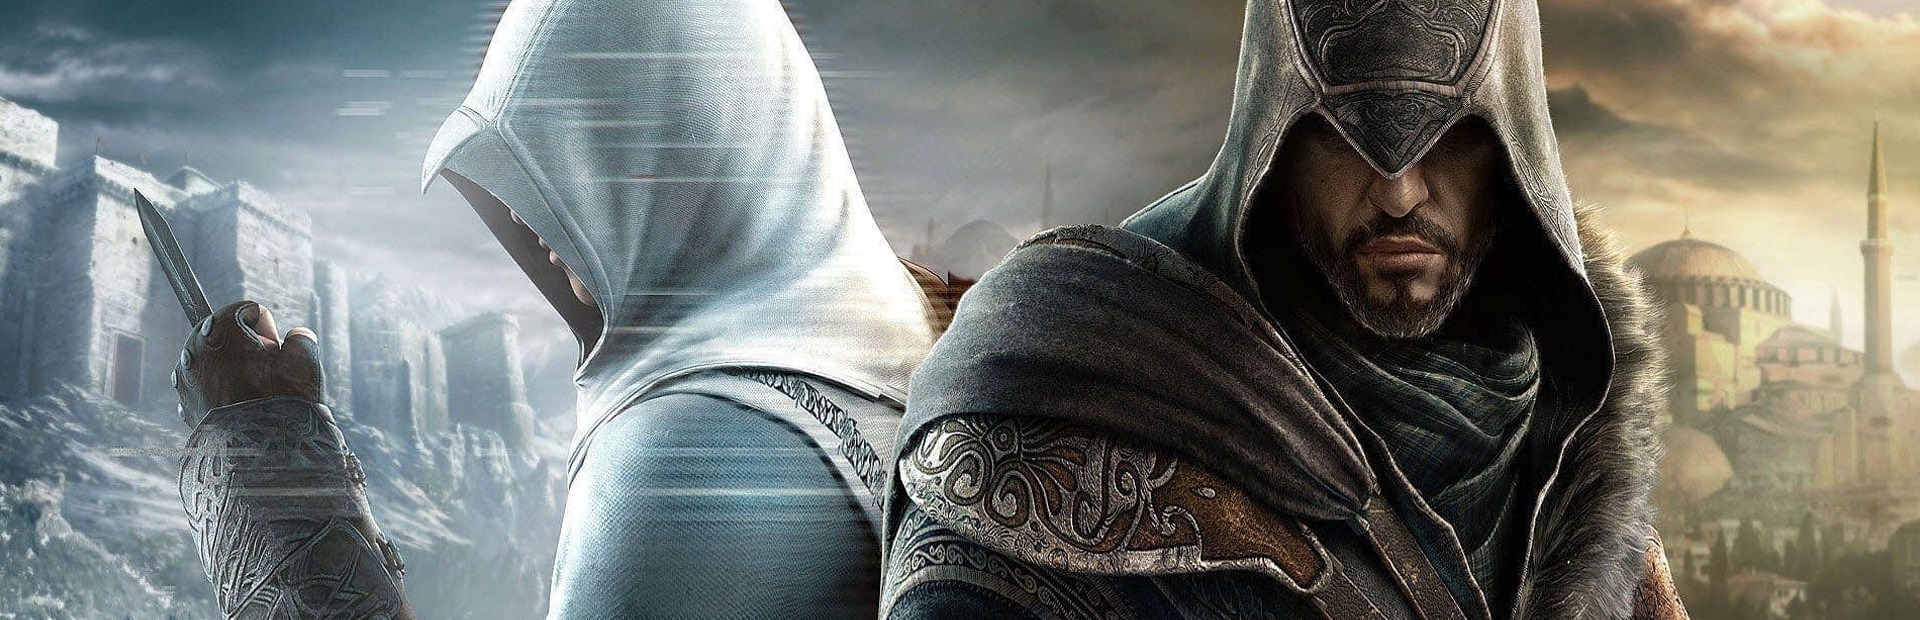 Assassins Creed The Ezio Collection] #74, #74 and #76. I platinum